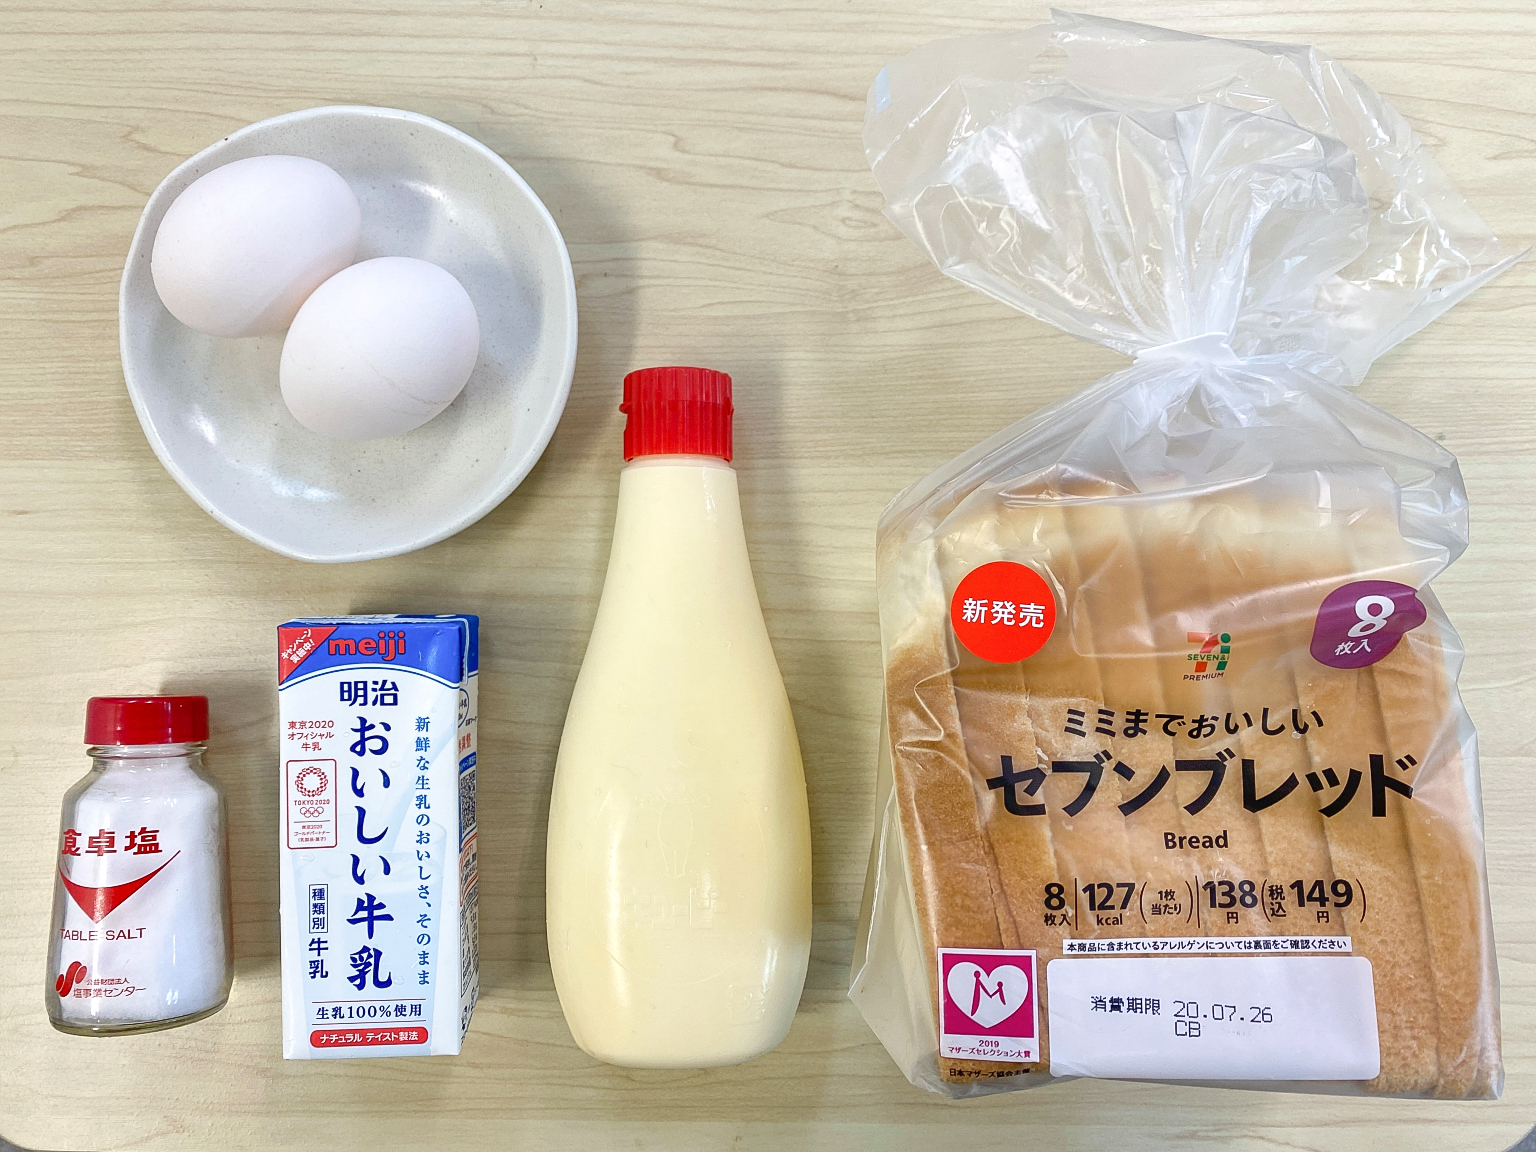 Tamagoyaki-Japanese-omelette-maker-kitchen-gadget-review-shop-buy-purchase-Japan-news-3.jpg